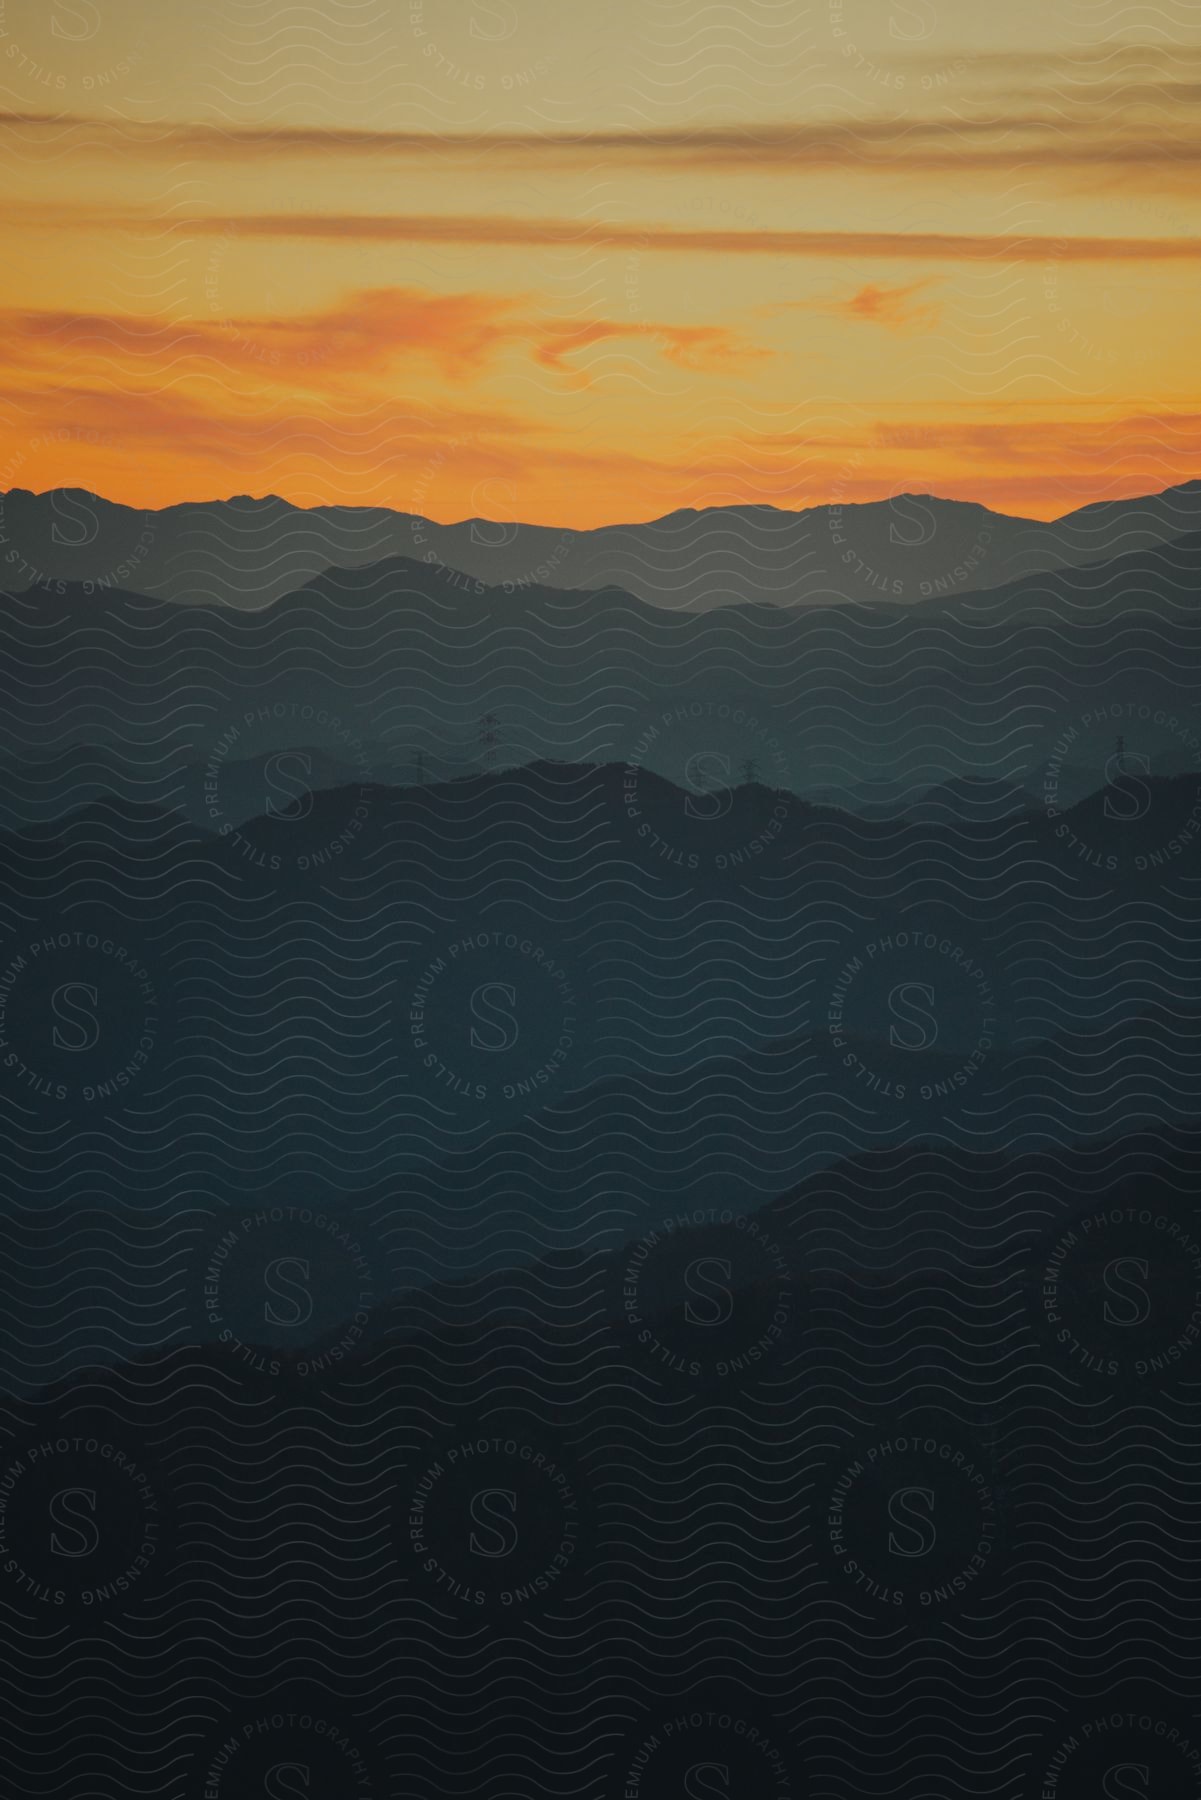 The sun sets in an orange sky over a mountain range.